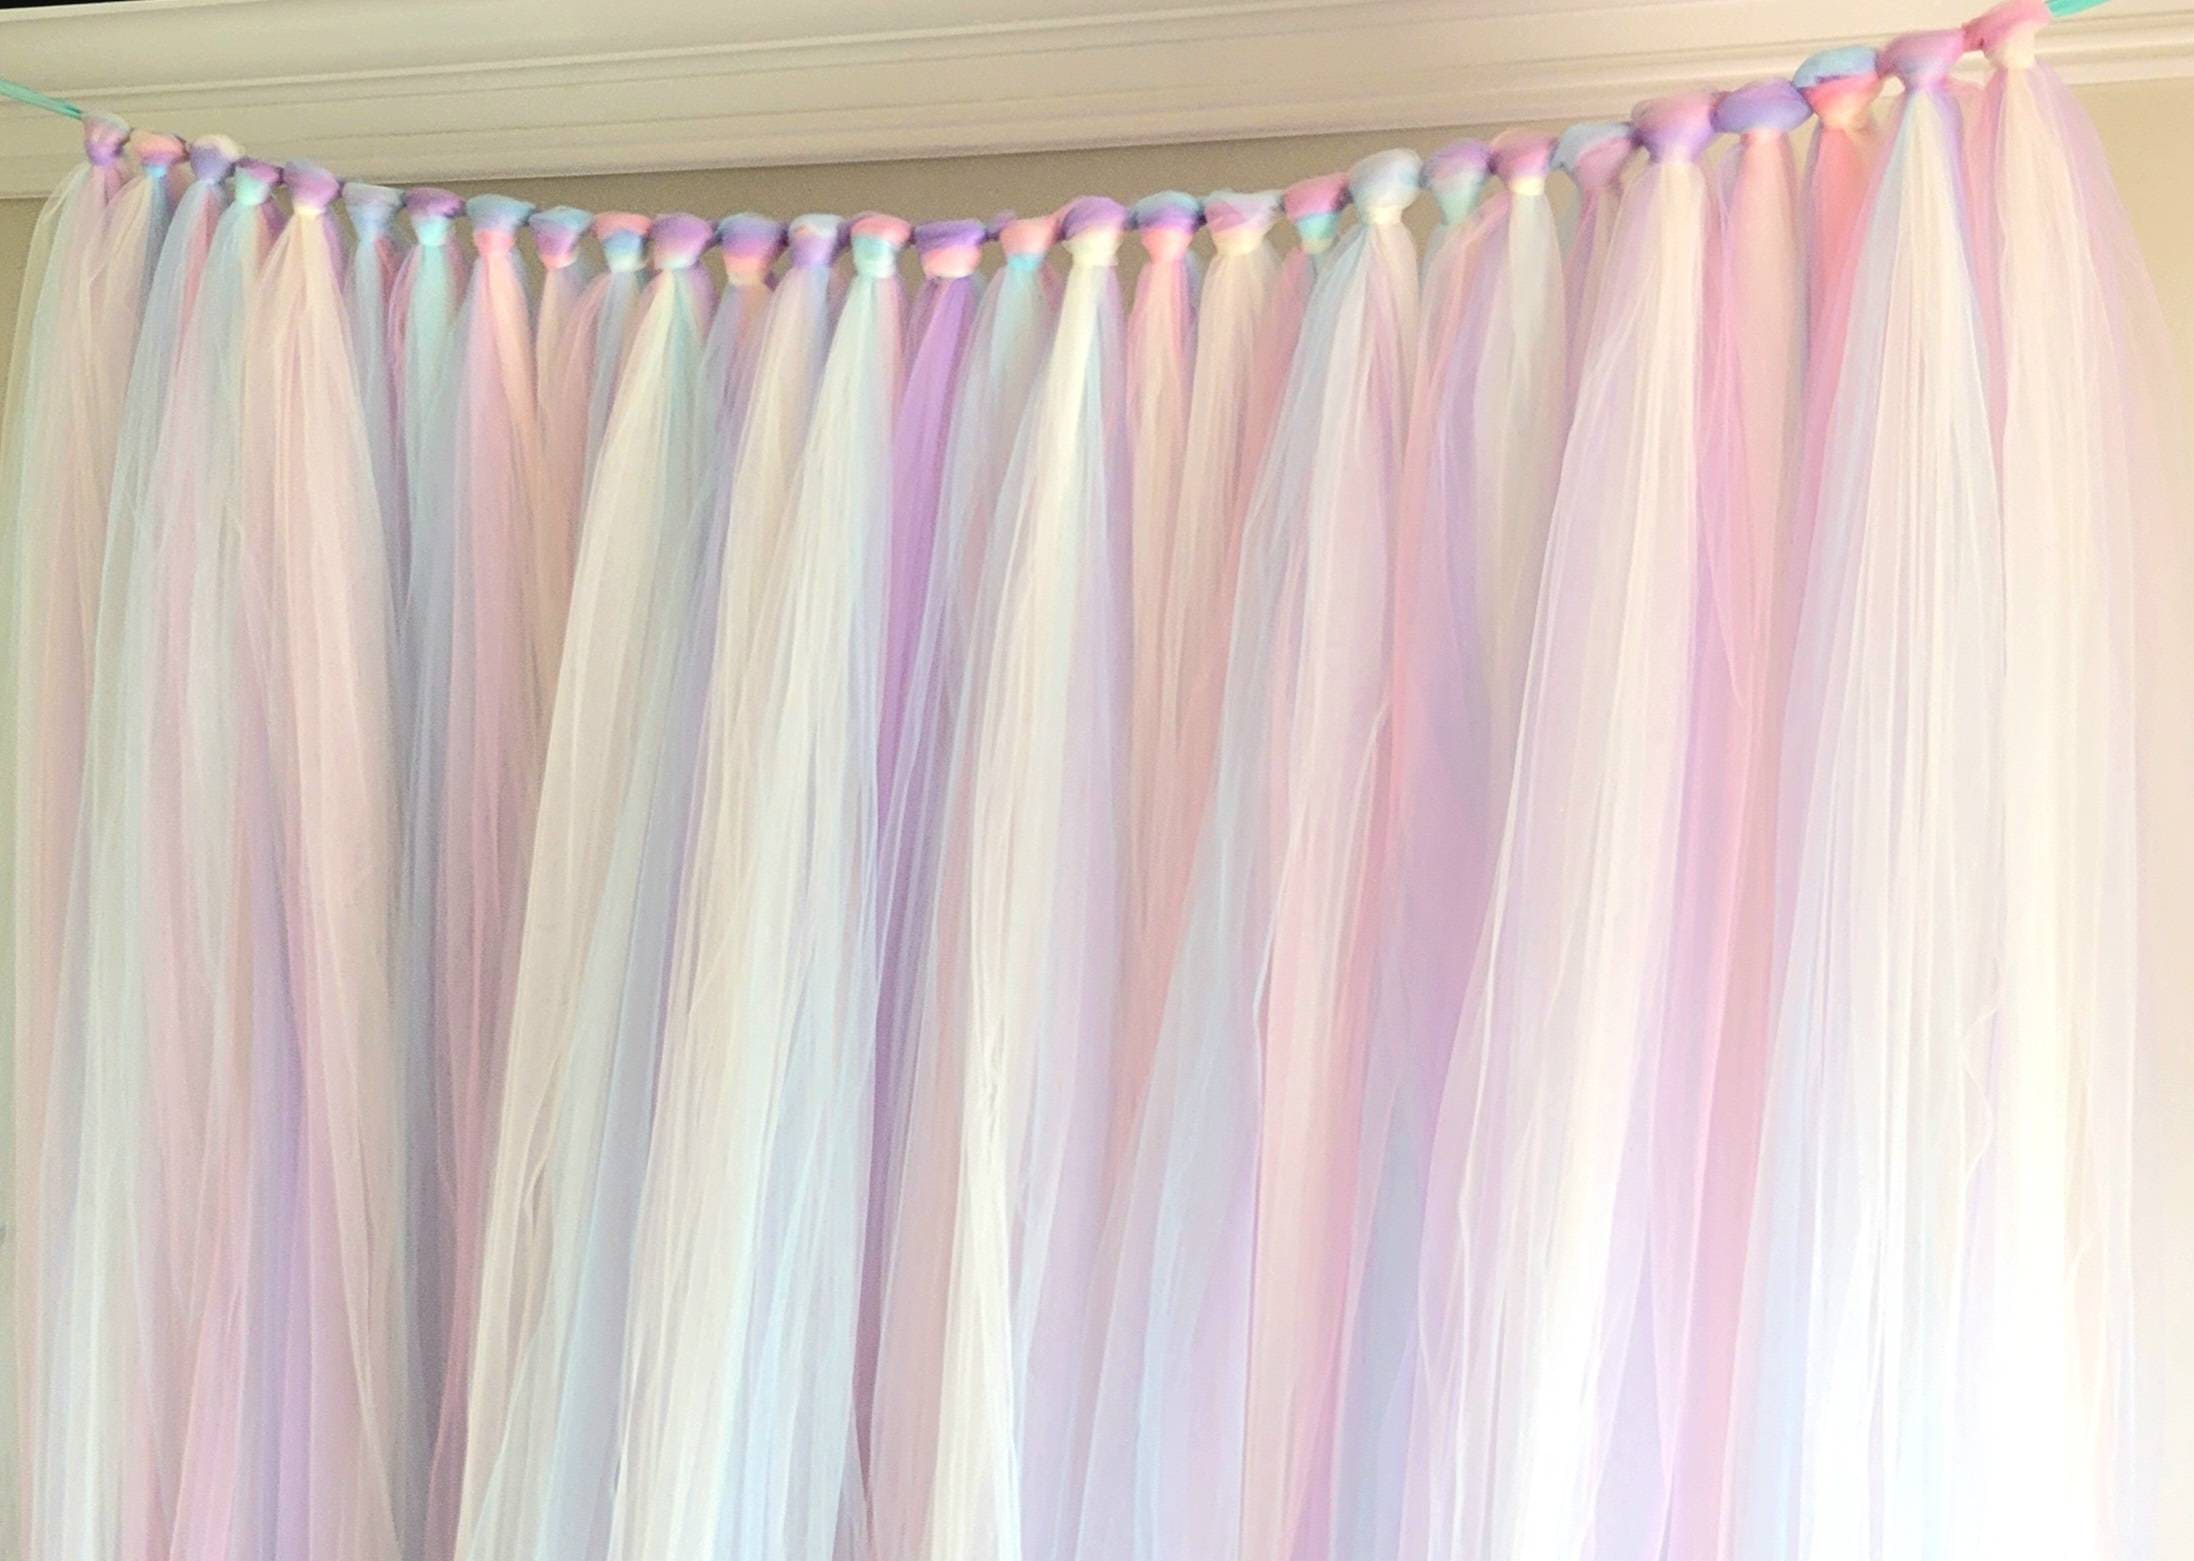 Nylon Tulle Sheer Fabric Fuschia Pink 54 inch wide DD315